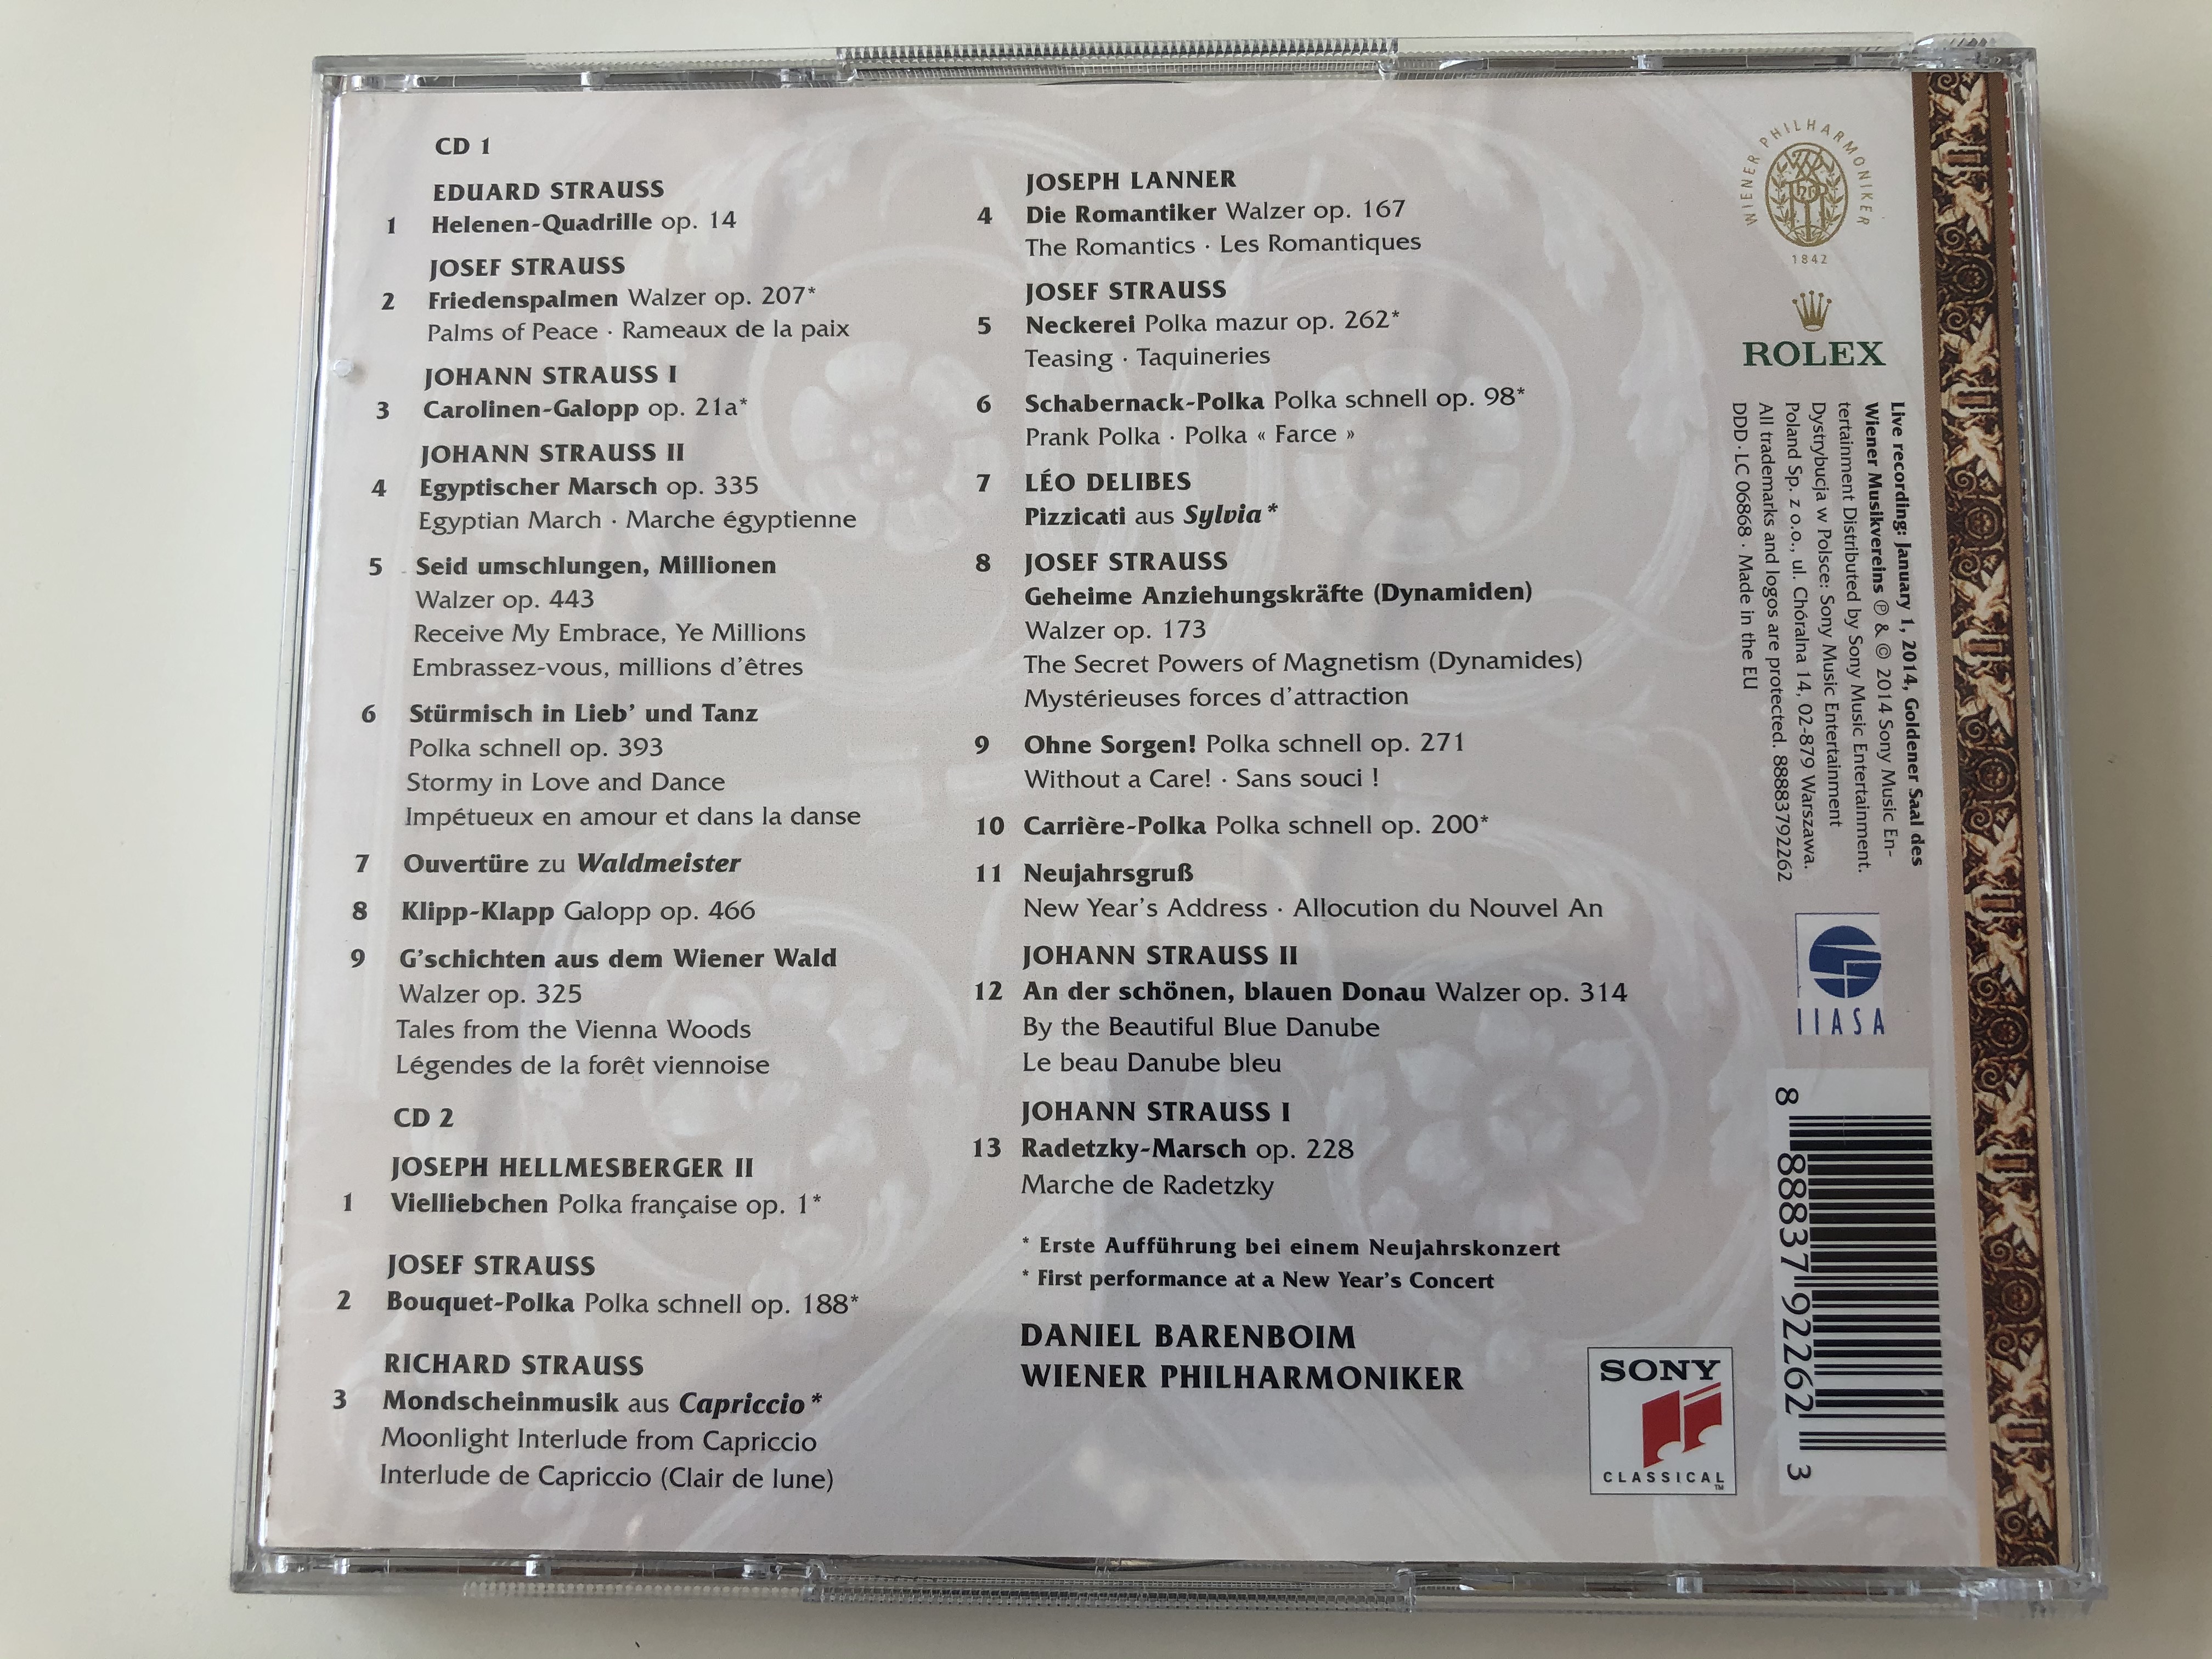 daniel-barenboim-wiener-philharmoniker-neujahrskonzert-new-year-s-concert-2014-sony-classical-2x-audio-cd-2014-88883792262-9-.jpg